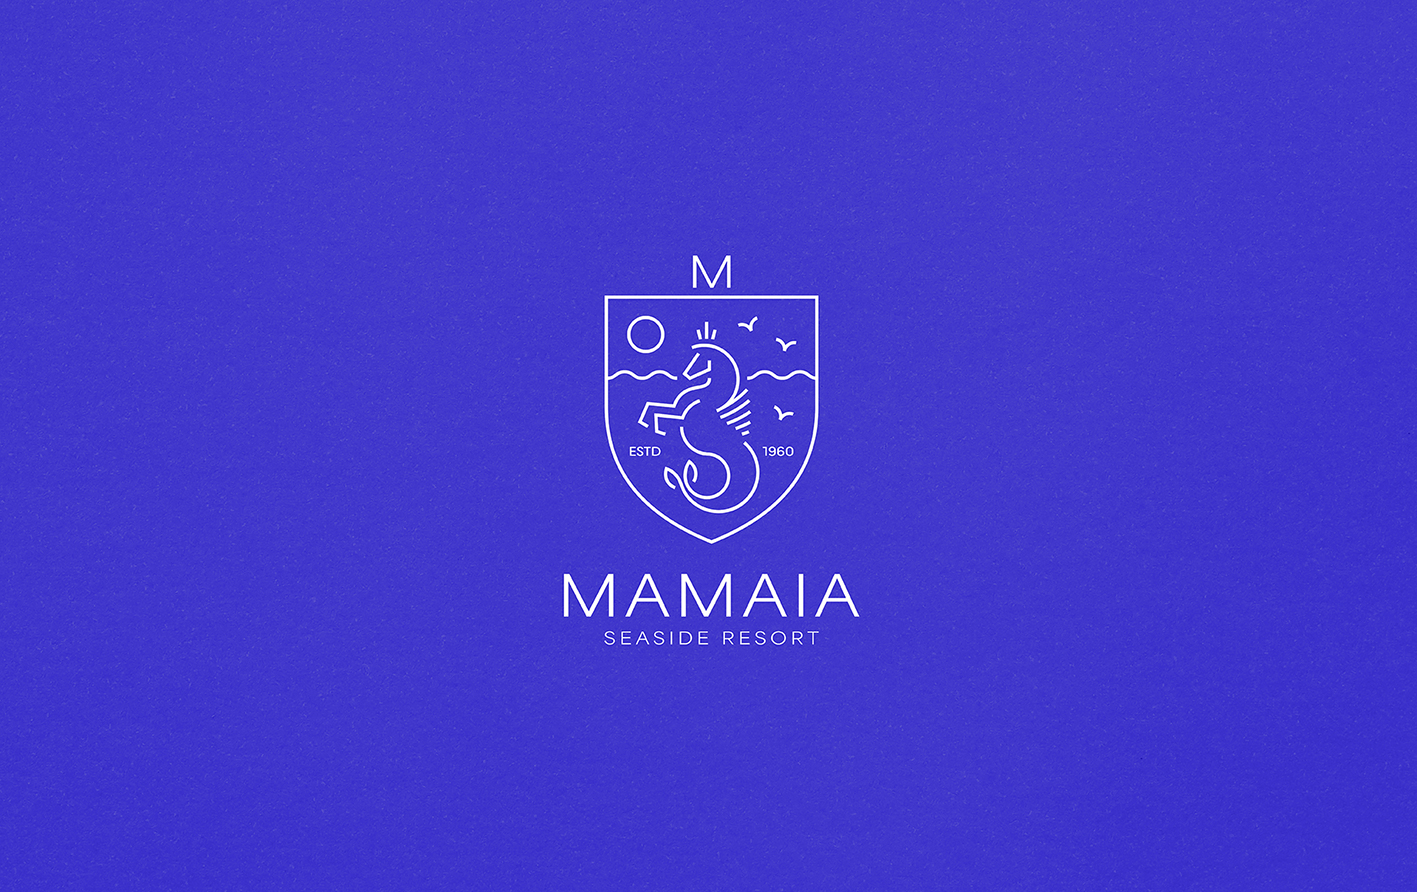 Logo and Identity for Seaside Resort Mamaia in Romania